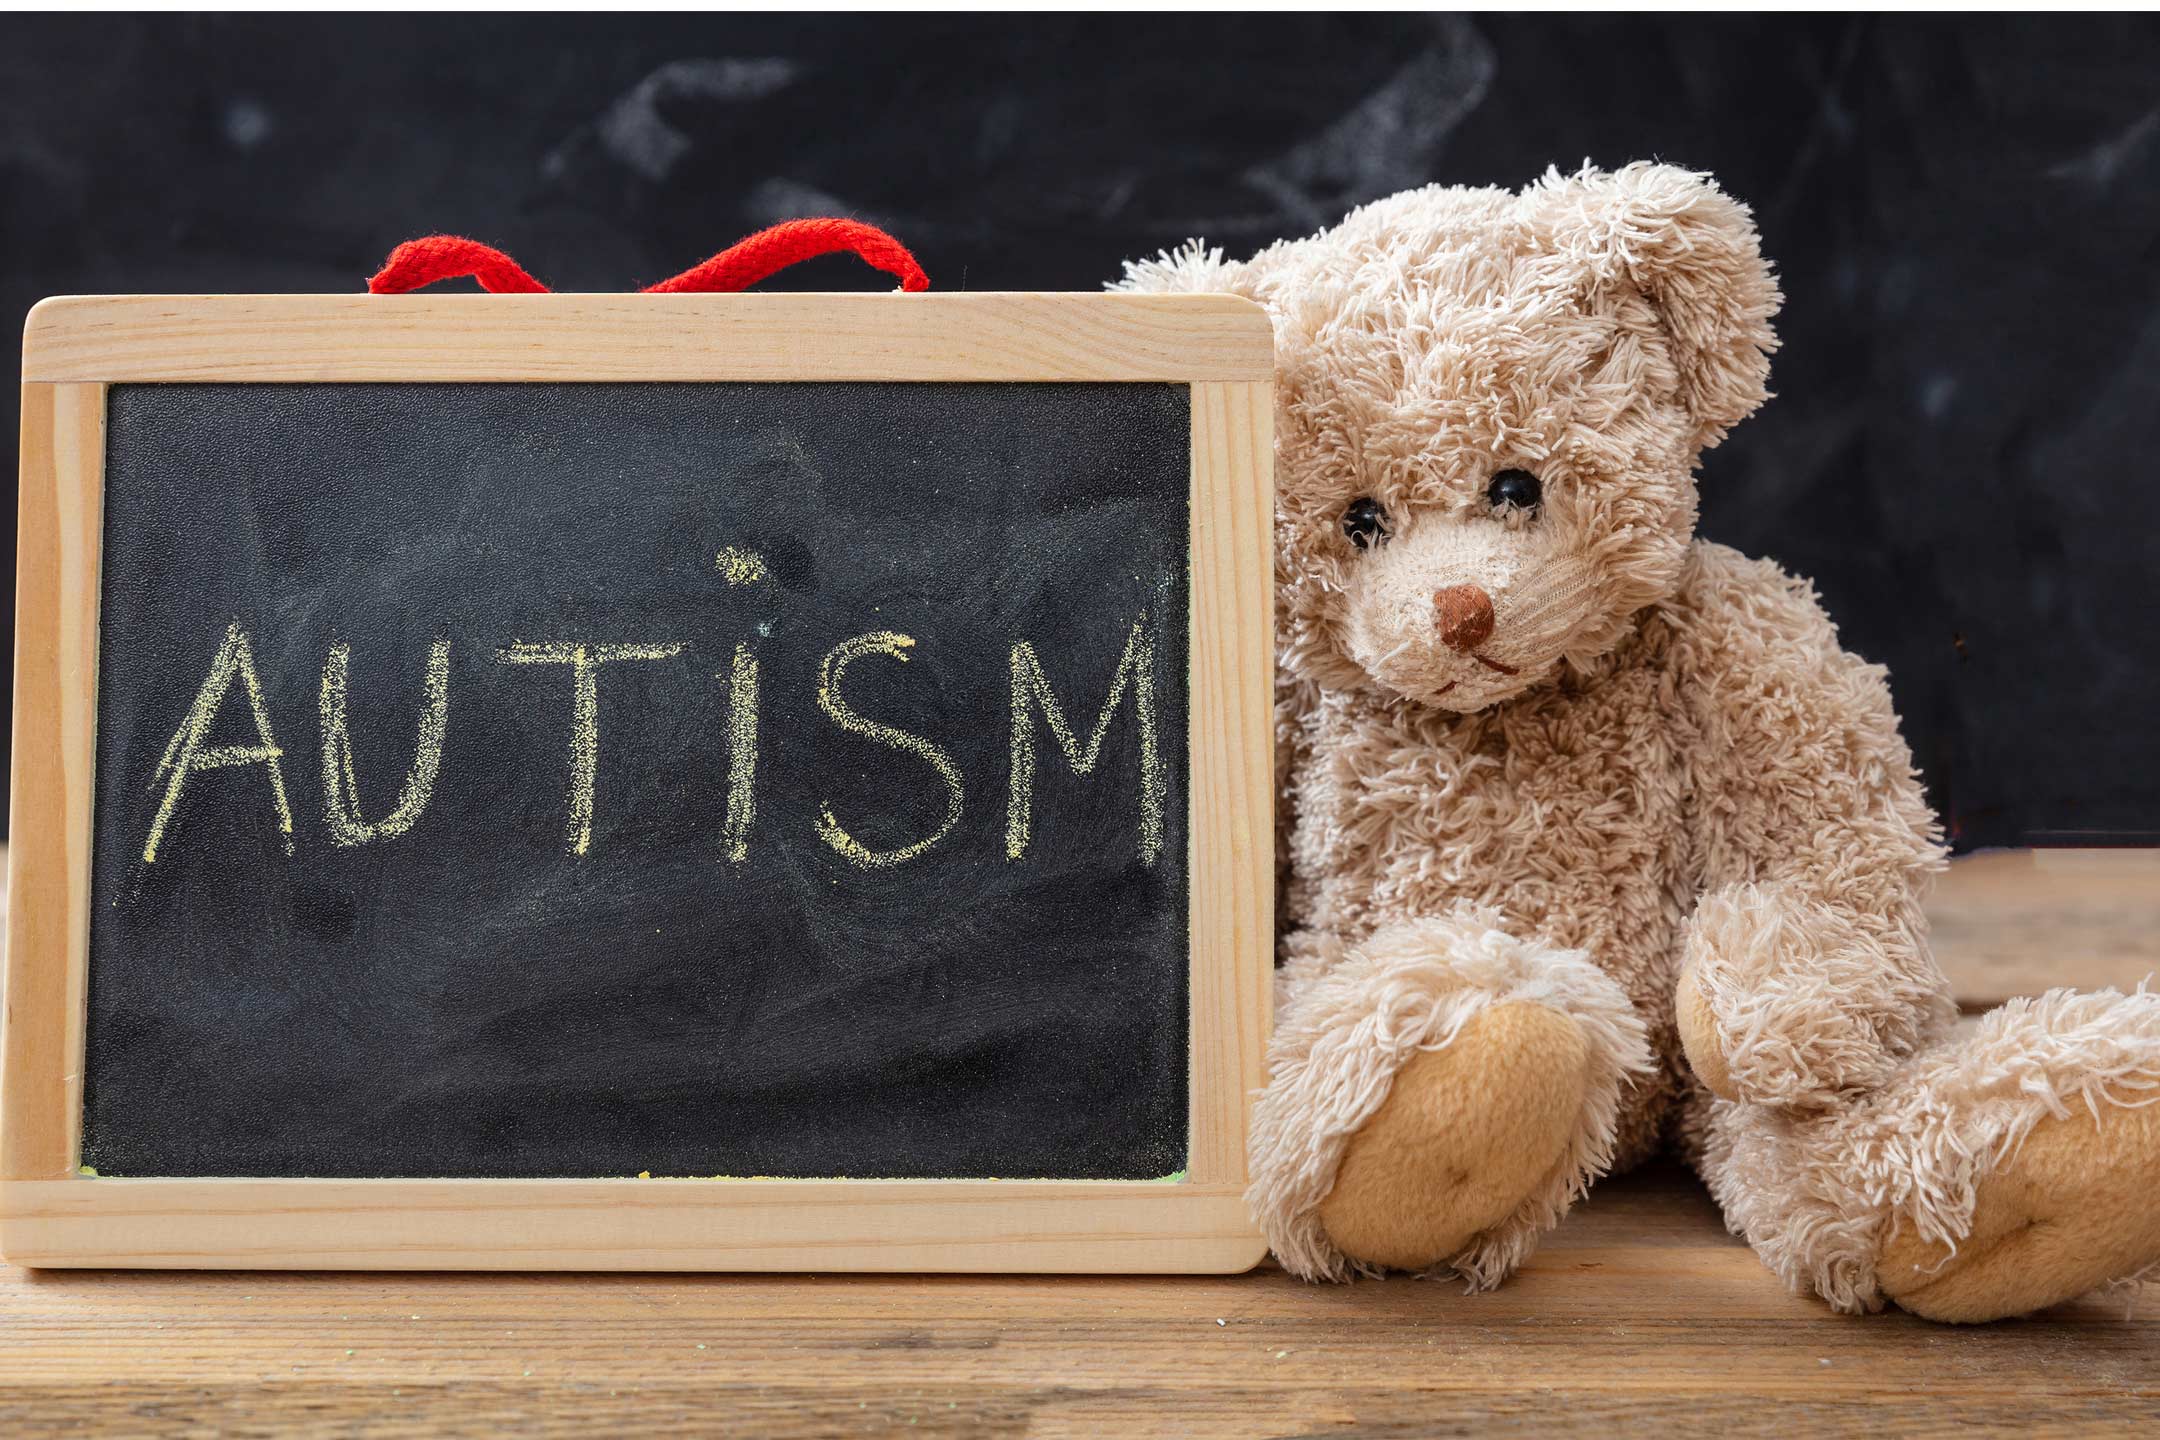 Autism-word-teddy-blackboard2160